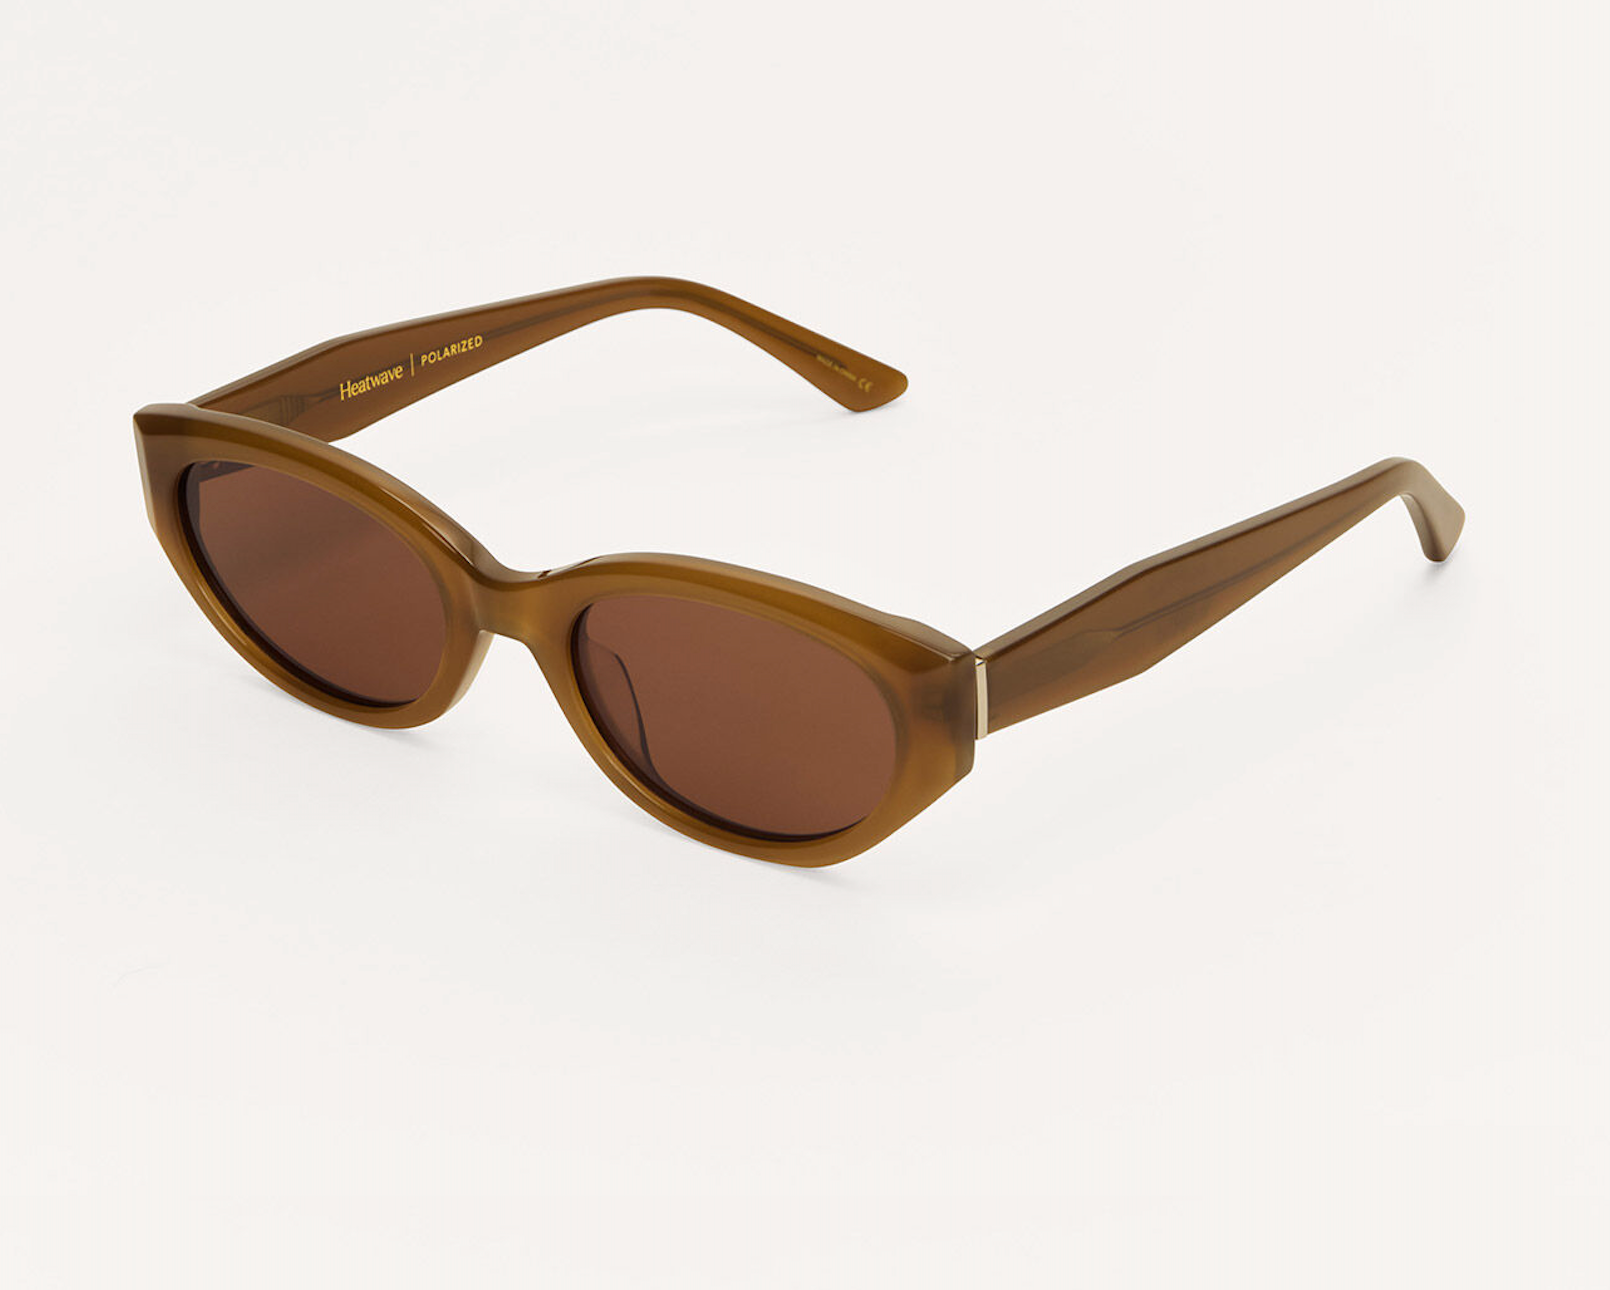 Heatwave Polarized Sunglasses - Taupe Brown